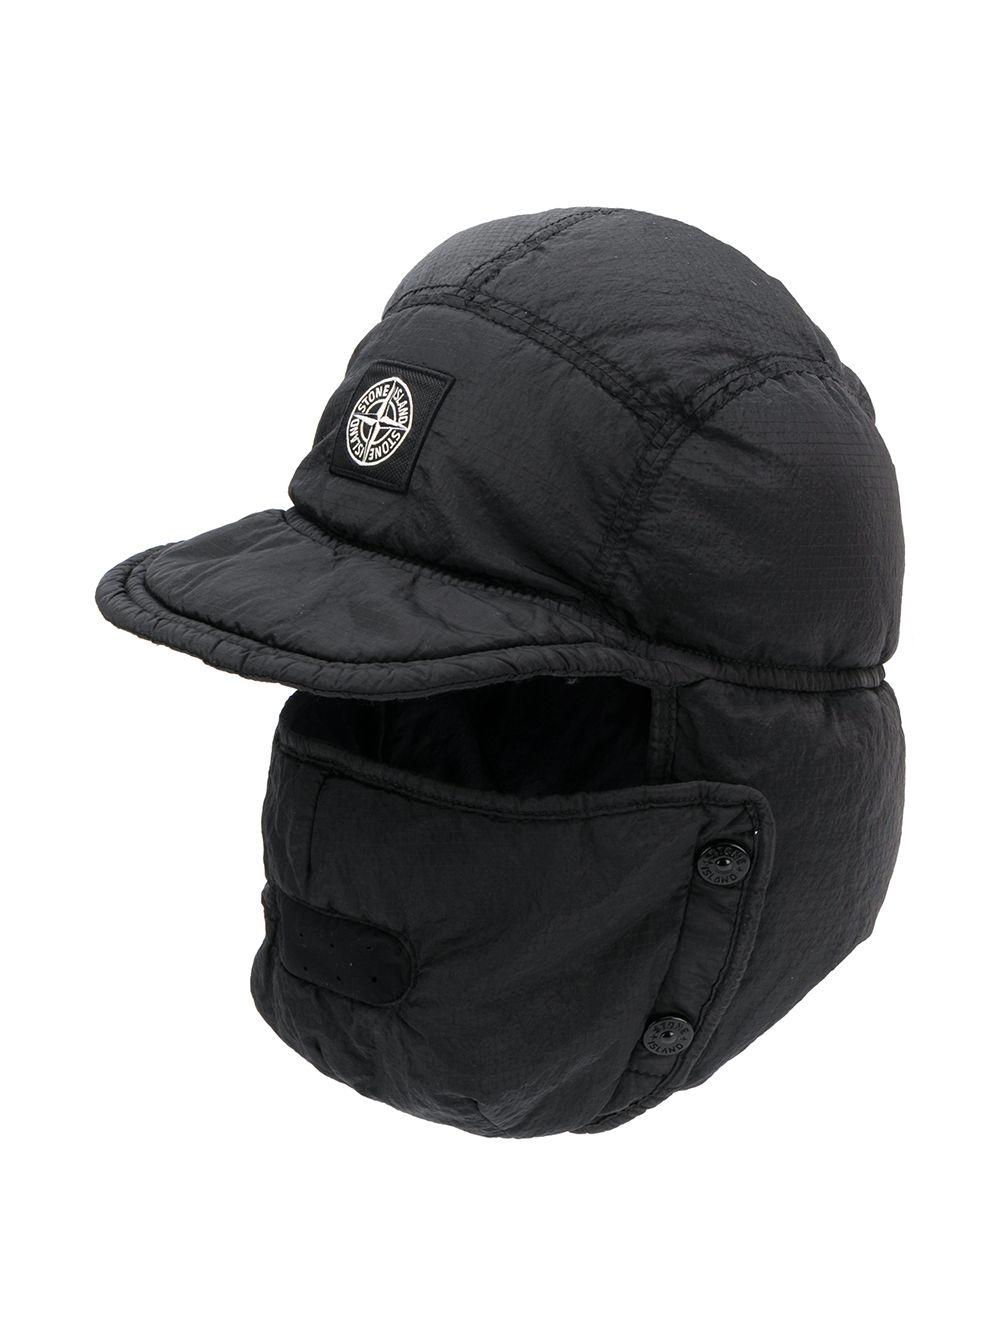 Stone Island Padded Face Shield Hat in Black | Lyst UK